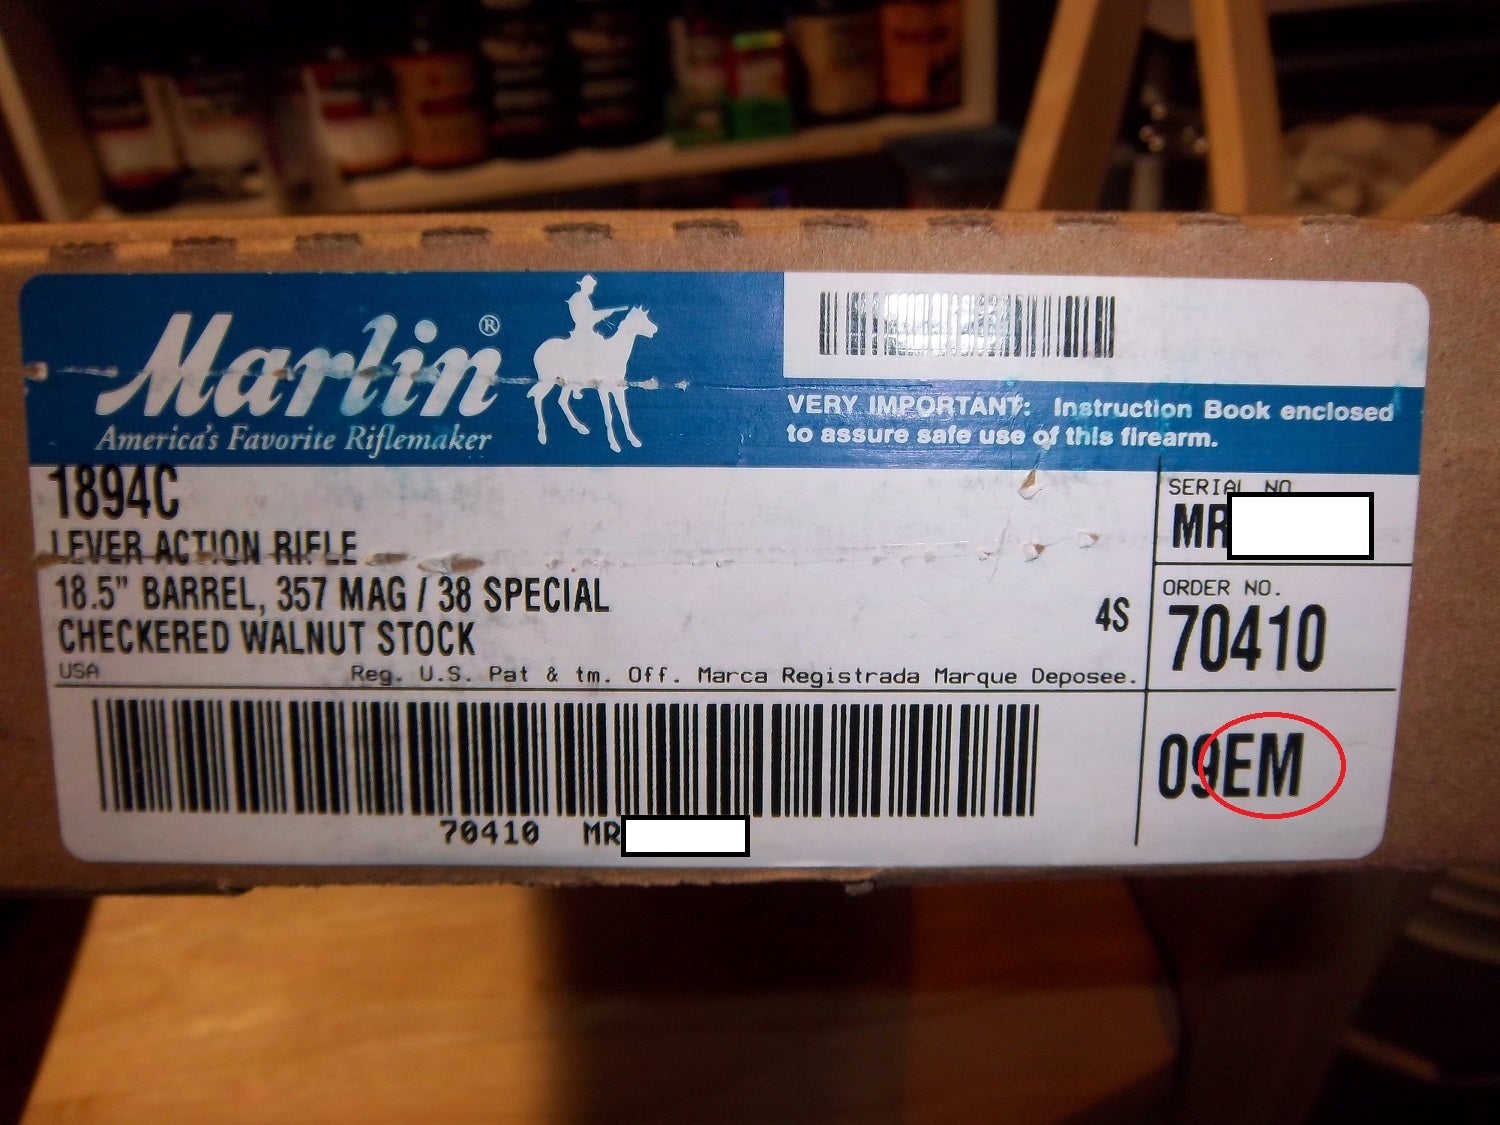 Guide marlin serial number Marlin Serial